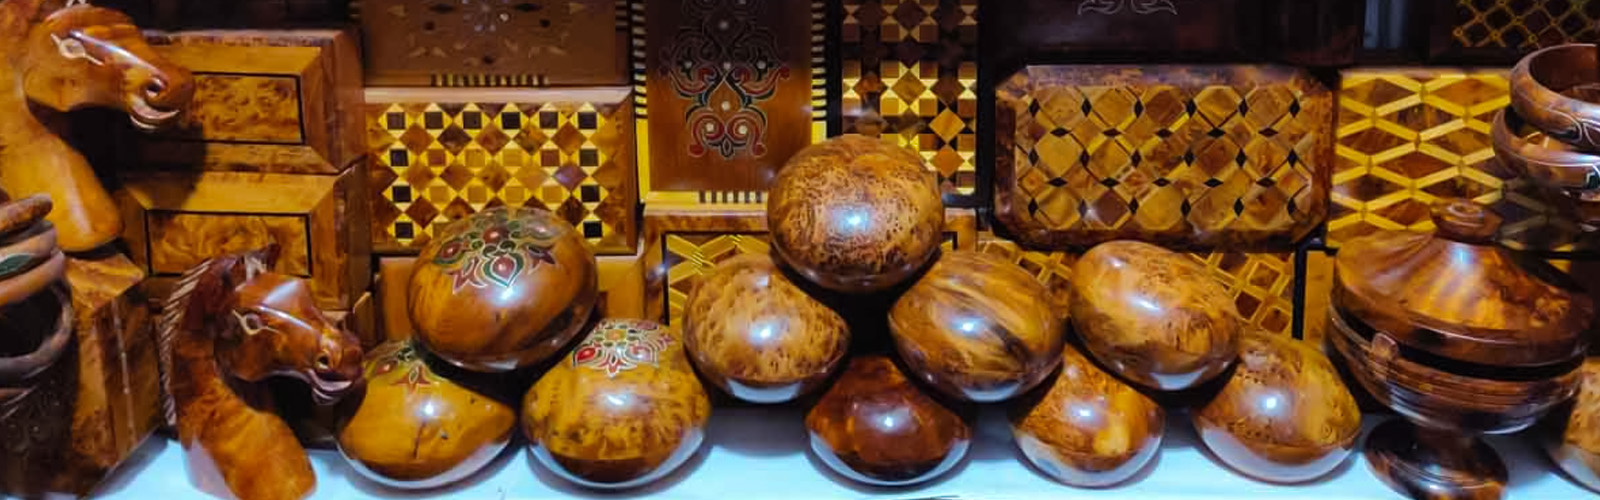 Morocco Souvenirs